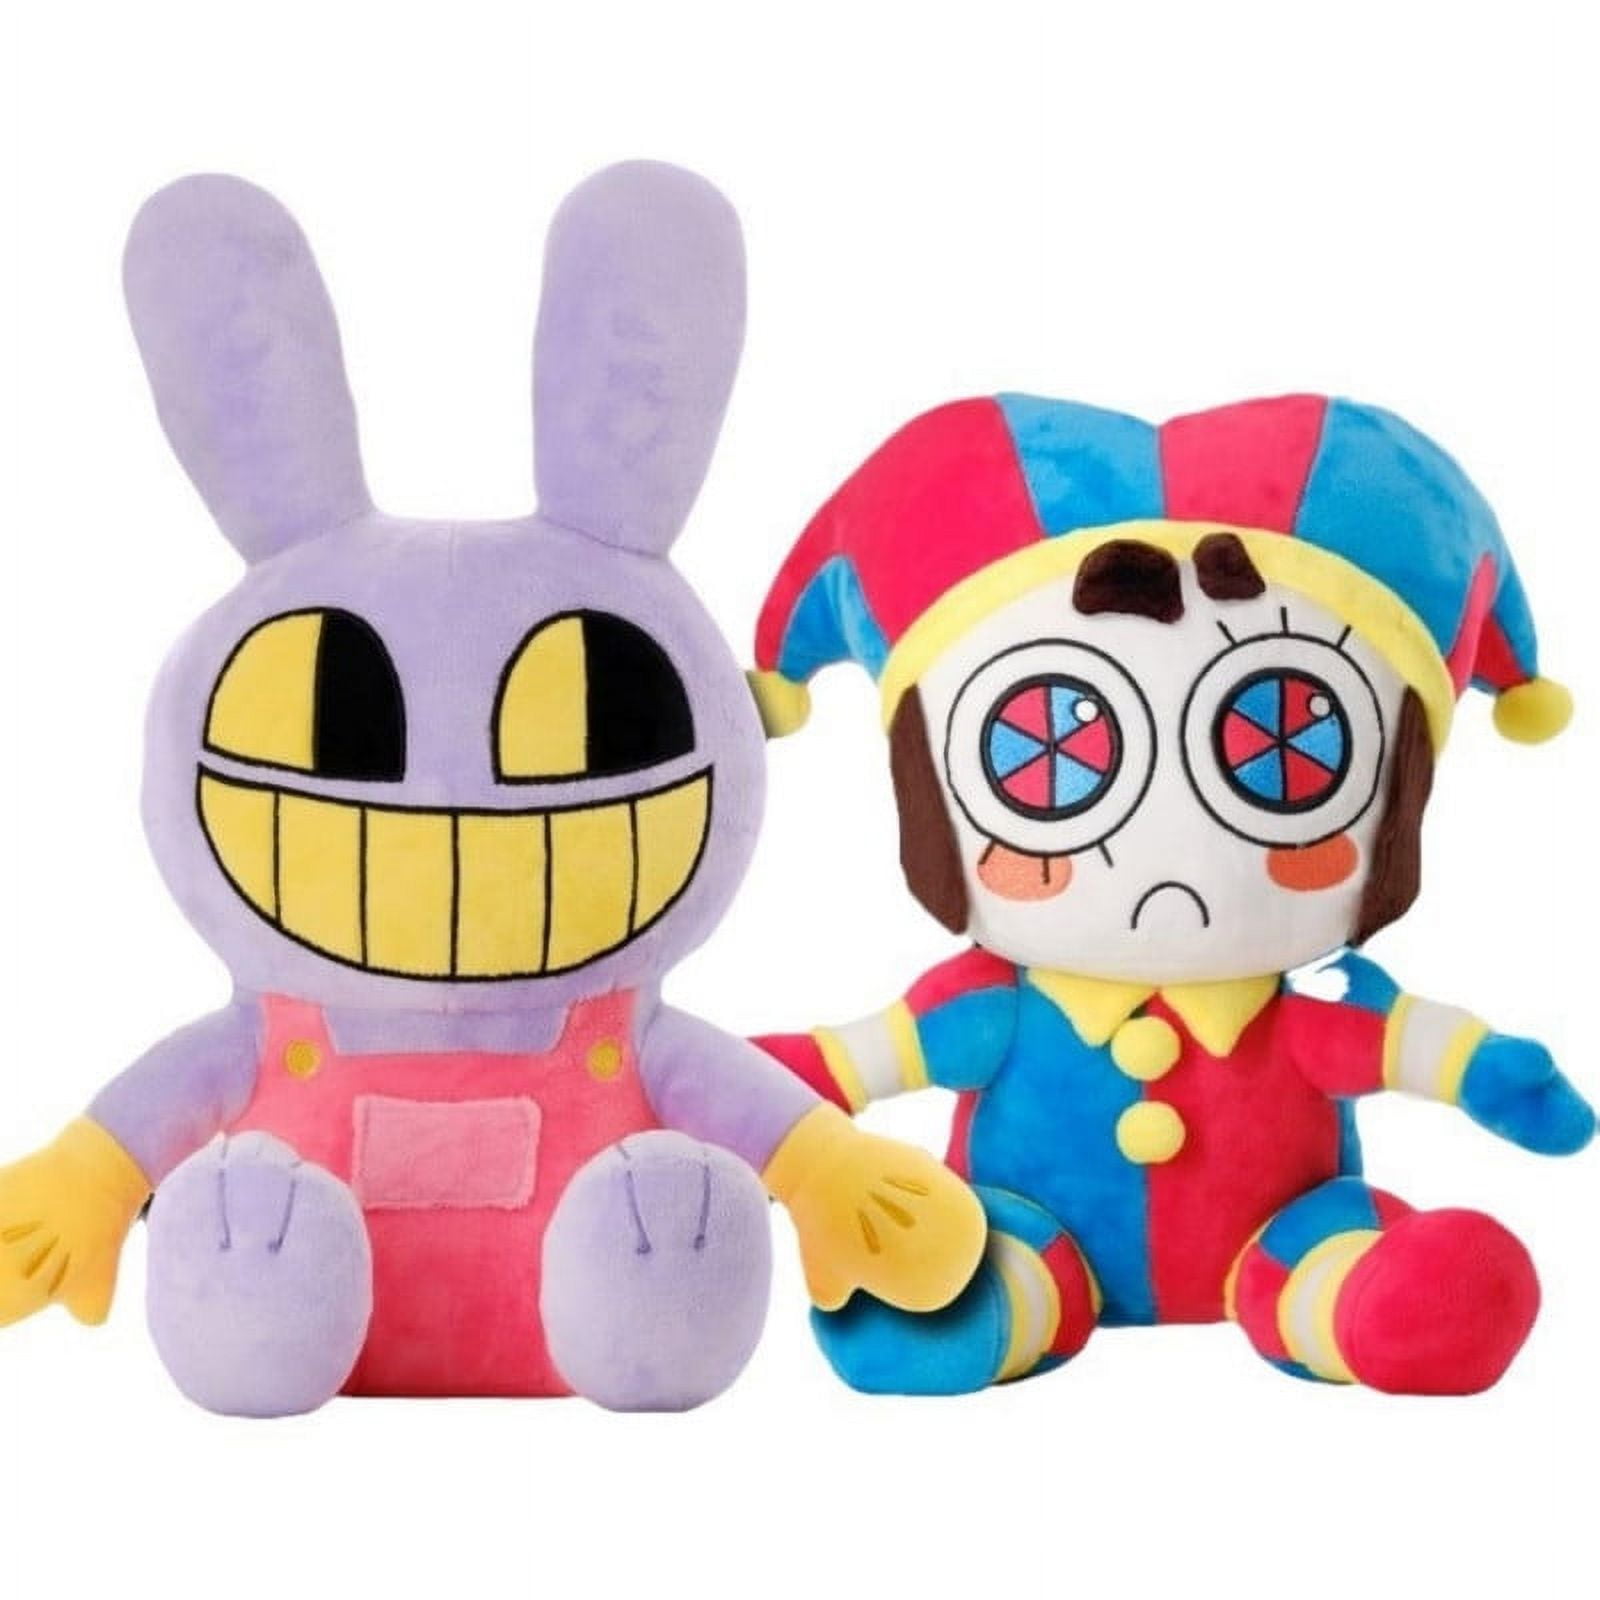 The Amazing Digital Circus Plush Toys, Pomni&Jax Plushies Toy for TV ...